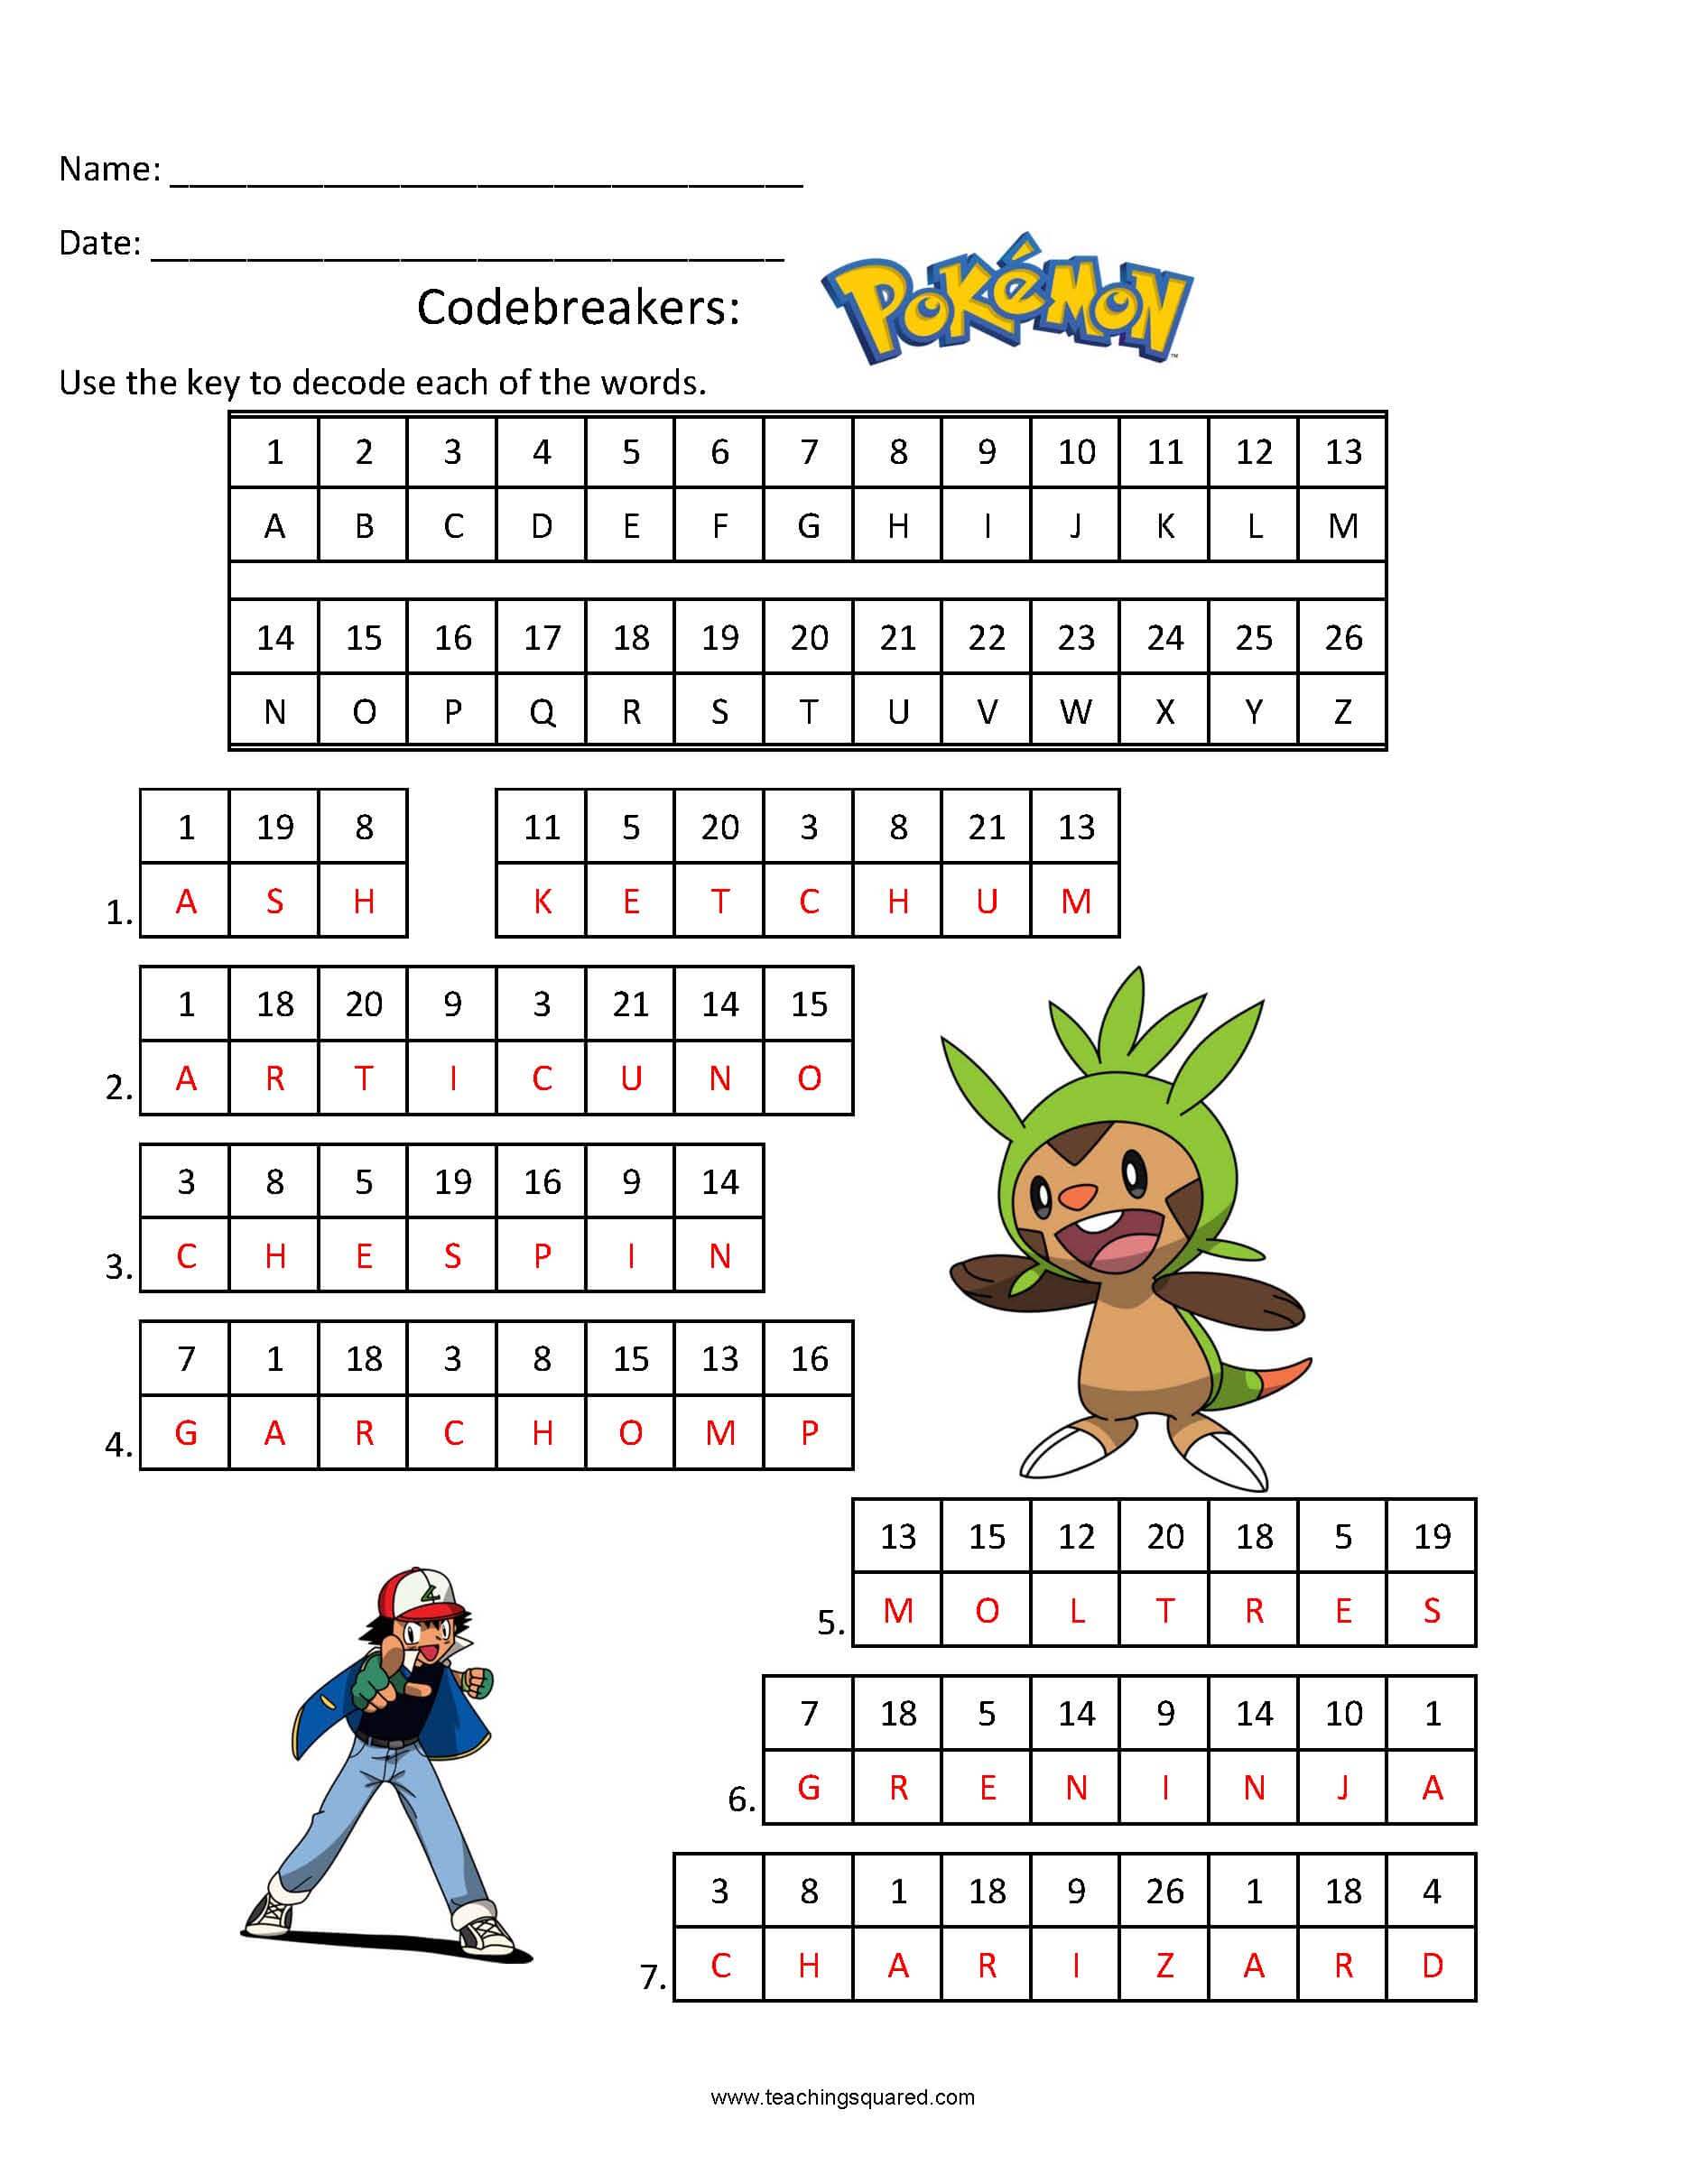 Codebreakers- Pokemon Fun Puzzle for kids